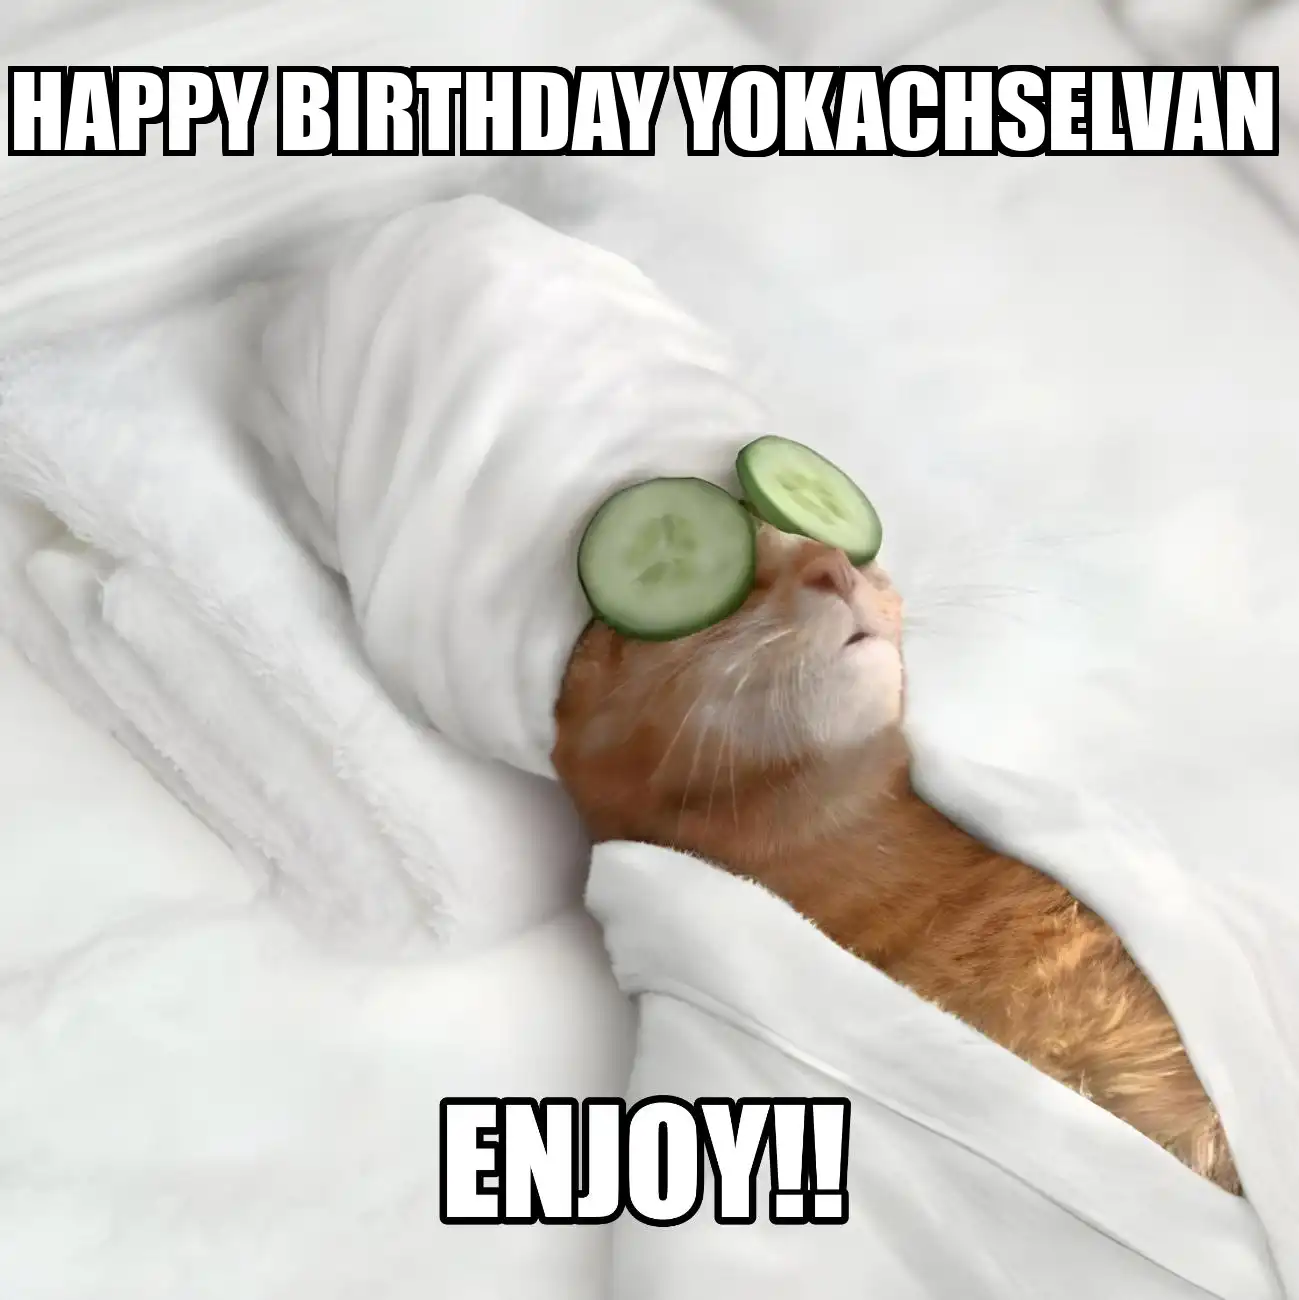 Happy Birthday Yokachselvan Enjoy Cat Meme